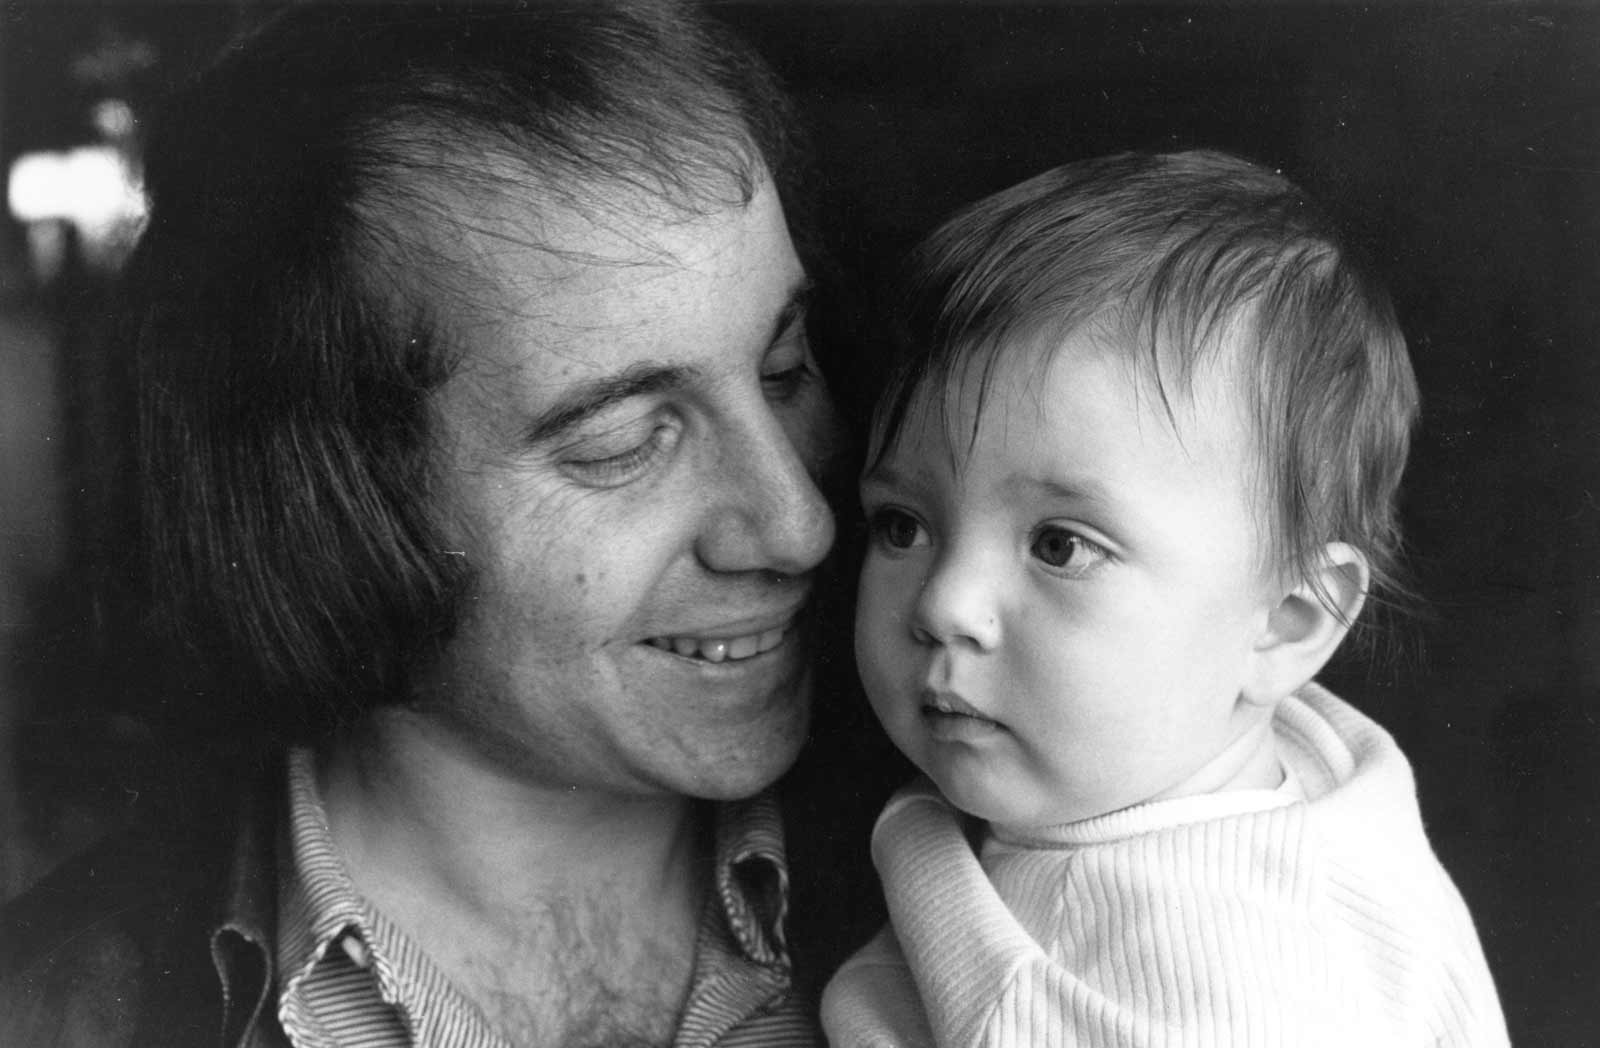 Paul Simon with his son Harper, June 7, 1973